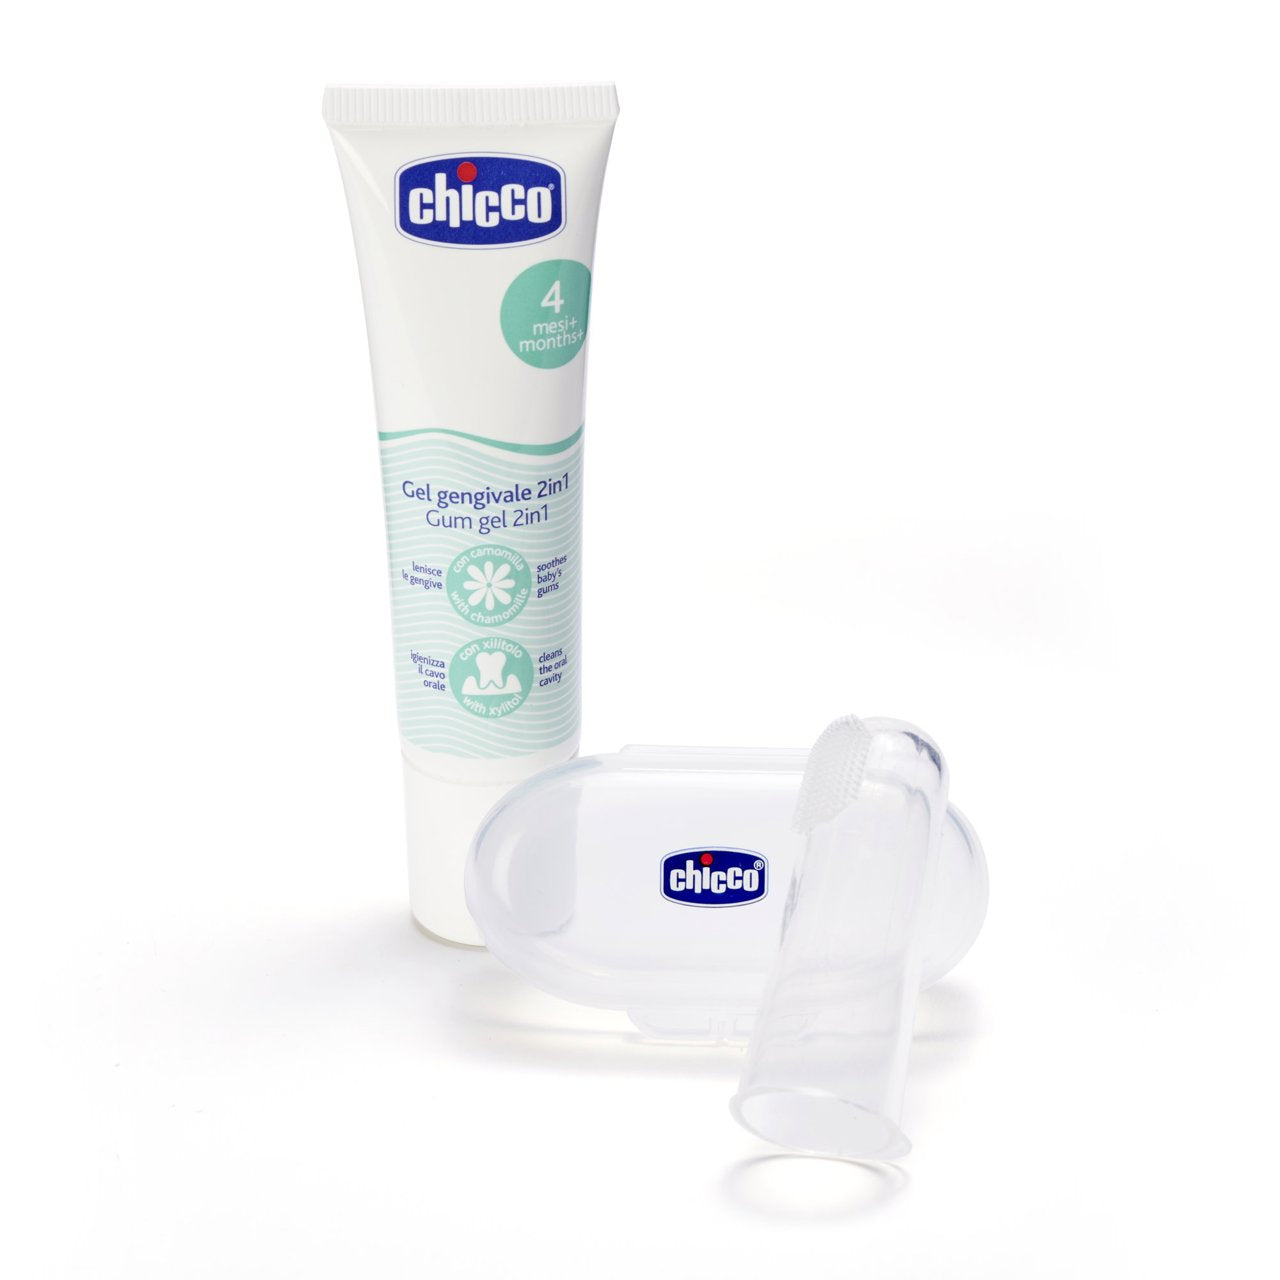 Chicco Kit Higiene Oral Primeiros Meses